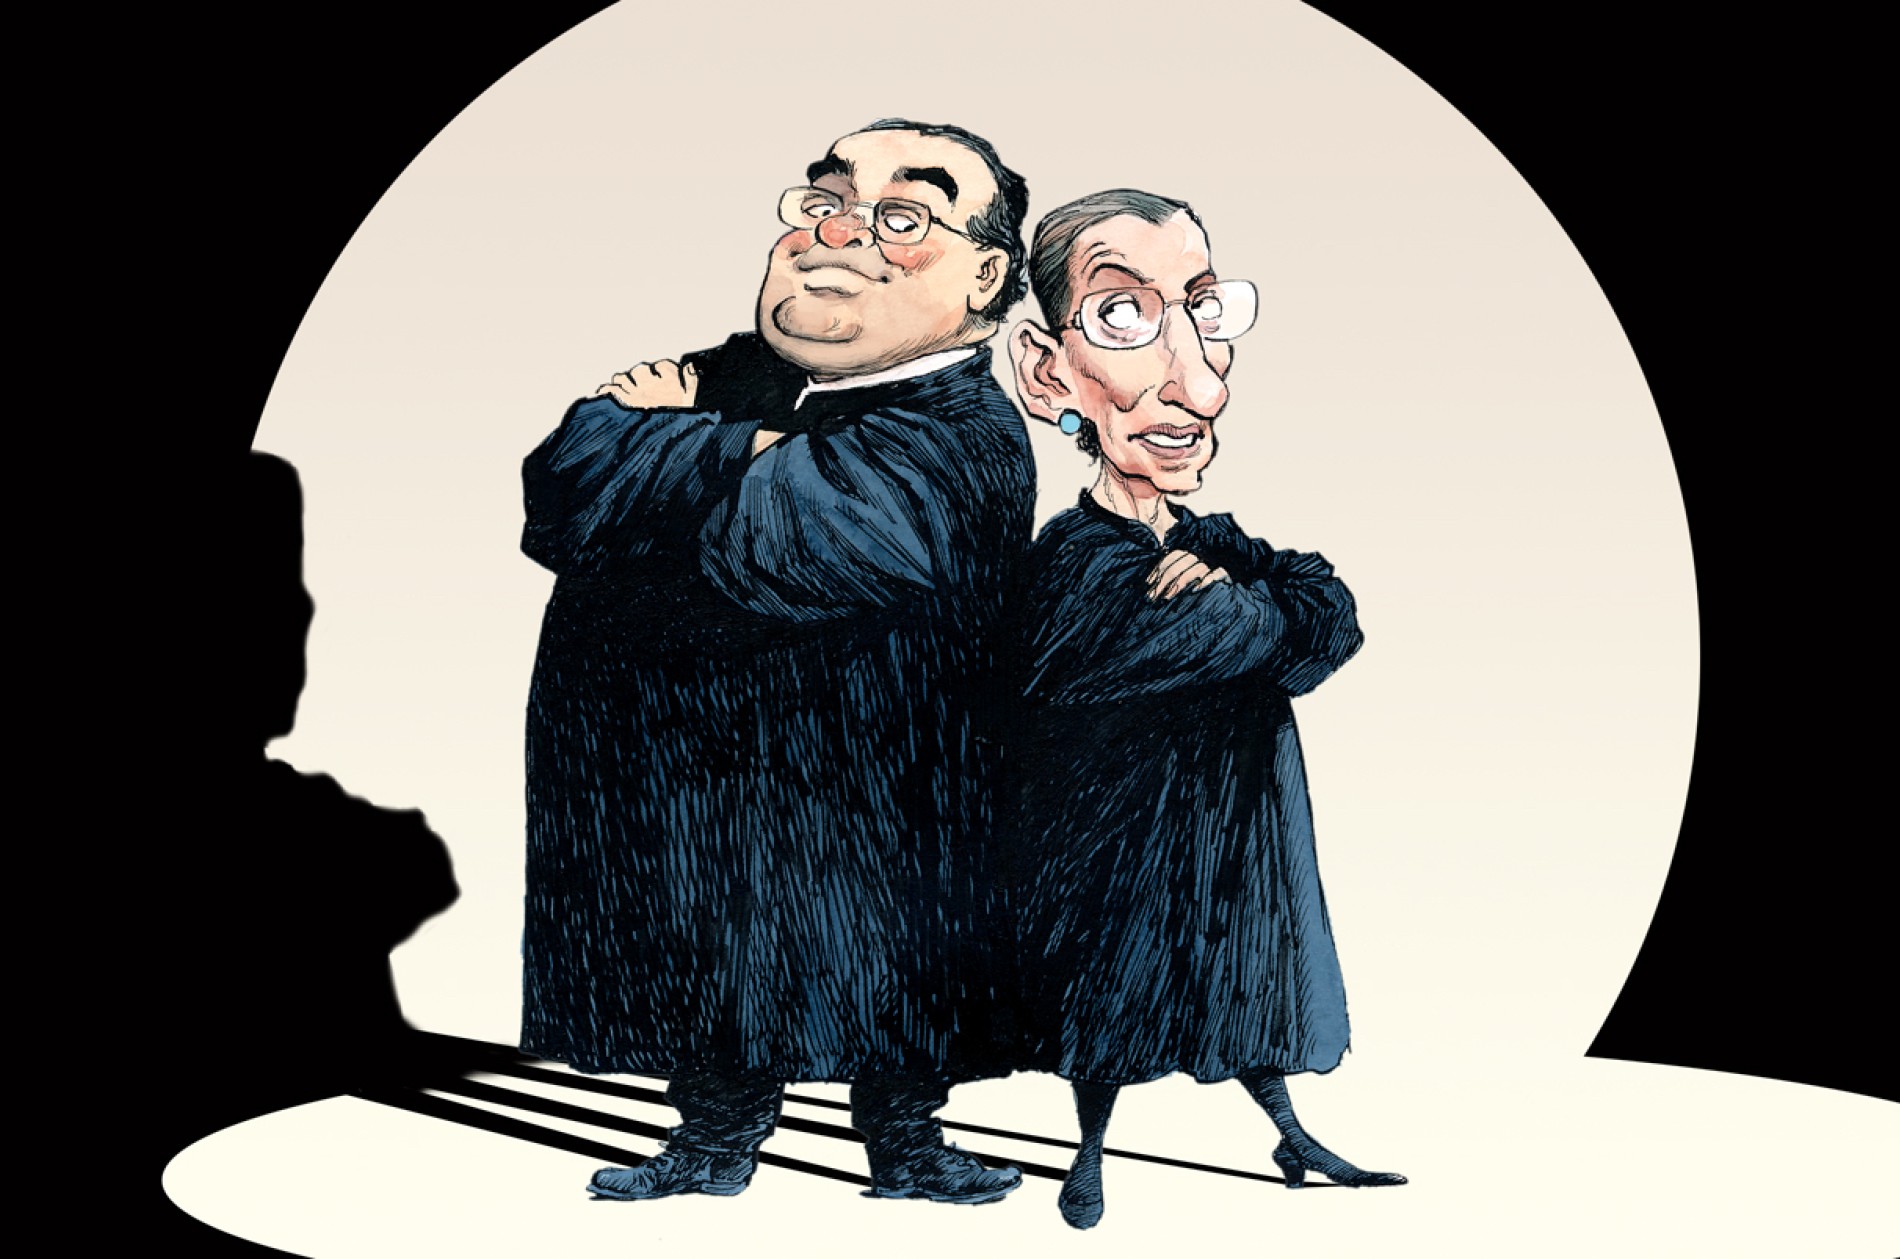 Scalia/Ginsburg illustration by David Parkins